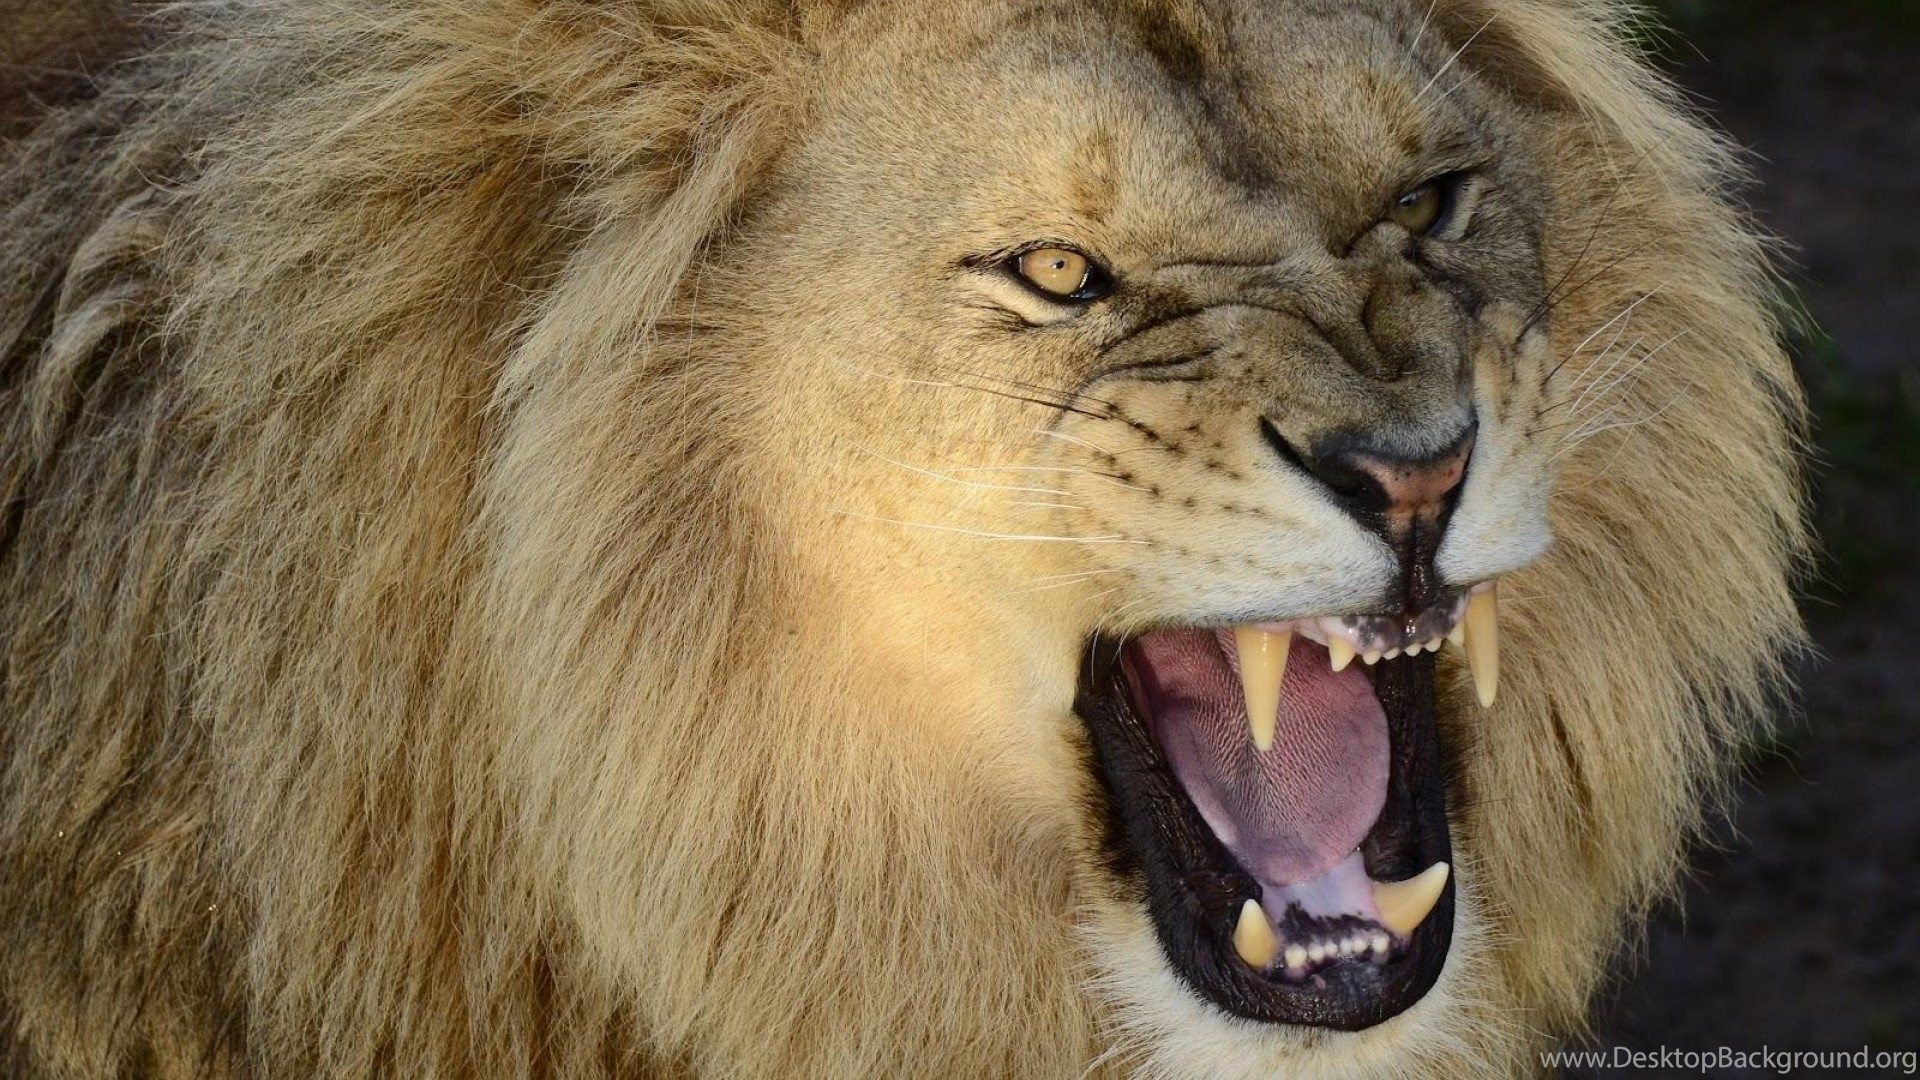 Picture Of A Roaring Lion Wallpaper Desktop Background